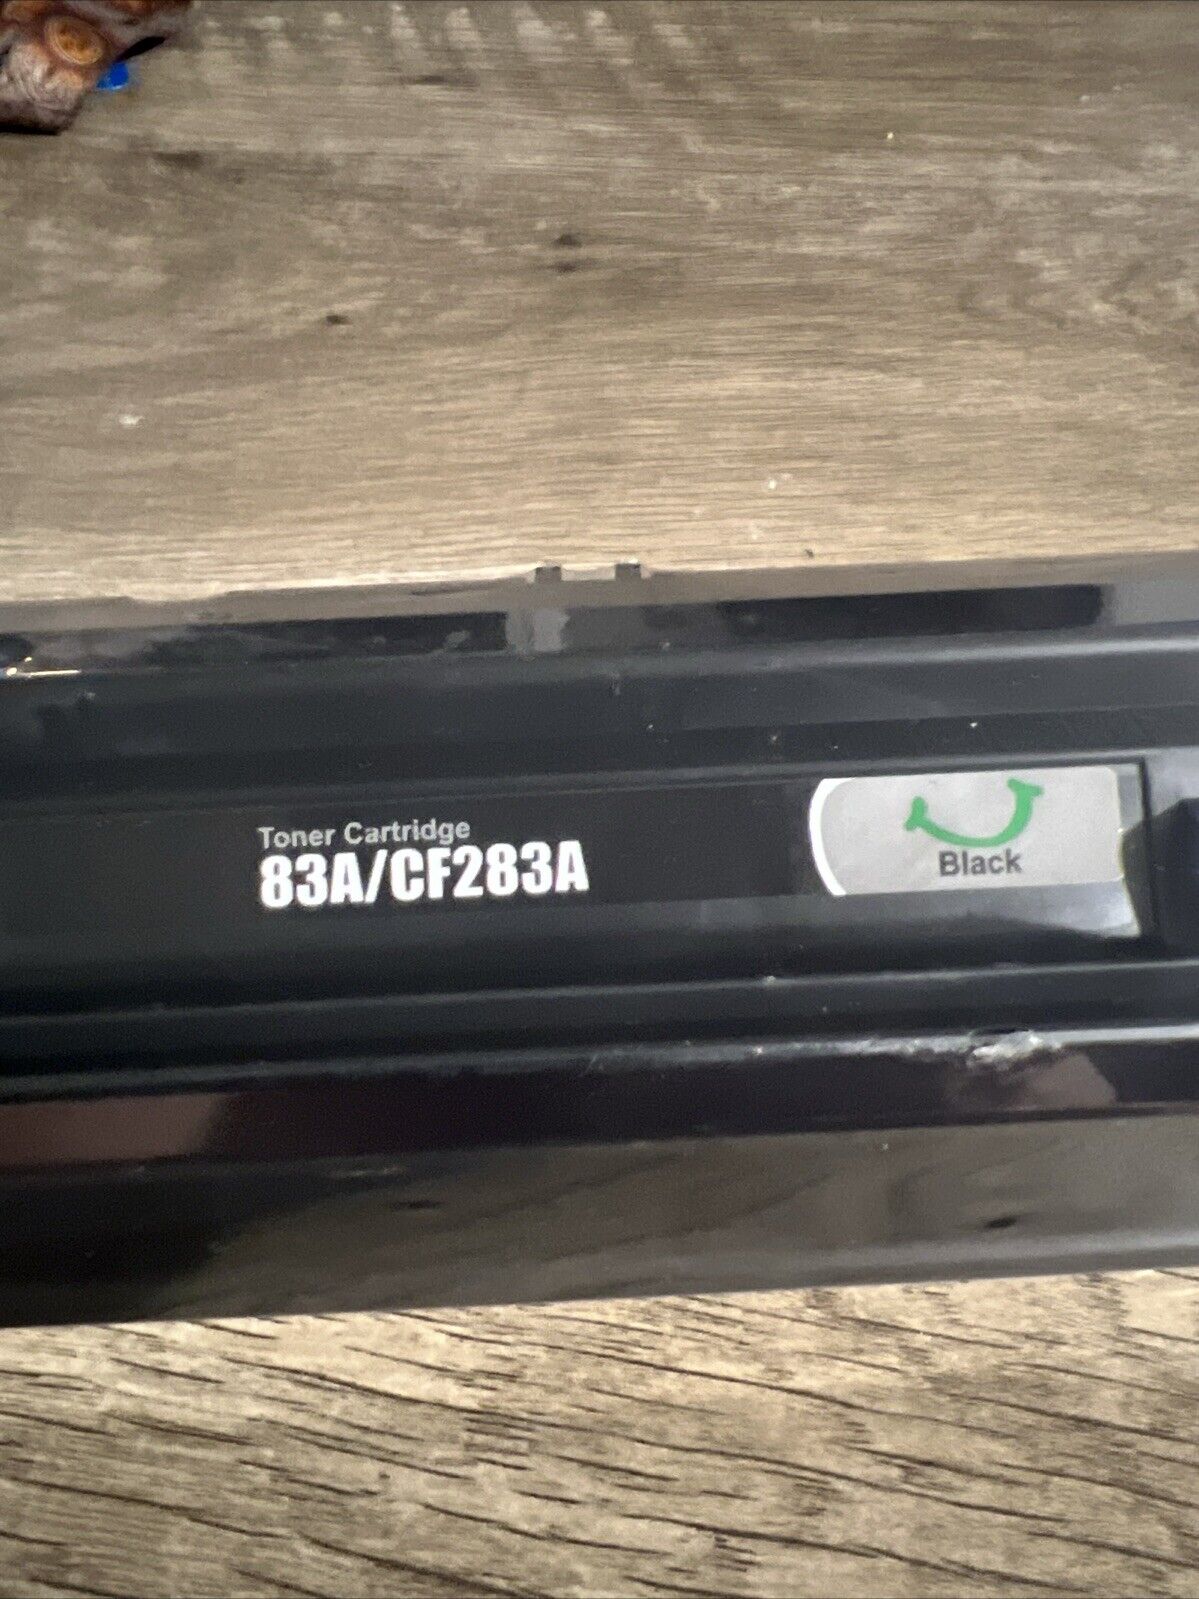 Halofox CF283A Toner Cartridge Replacement for HP - Black, Pack of 1